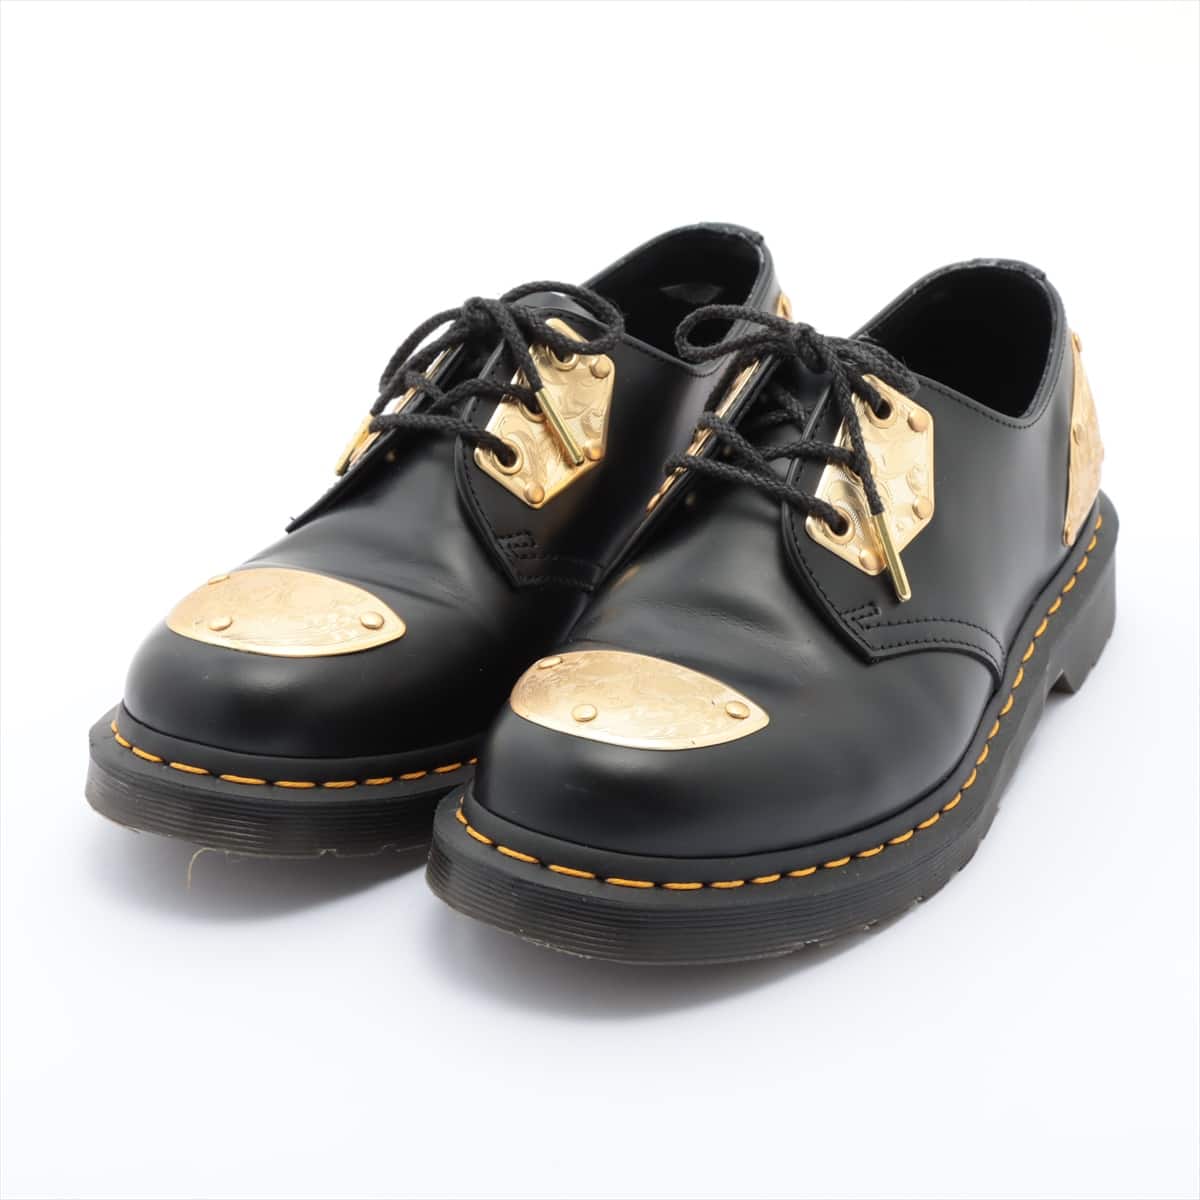 Dr. Martens Leather Leather shoes 41 Men's Black×Gold 1461 KING NERD Collaboration